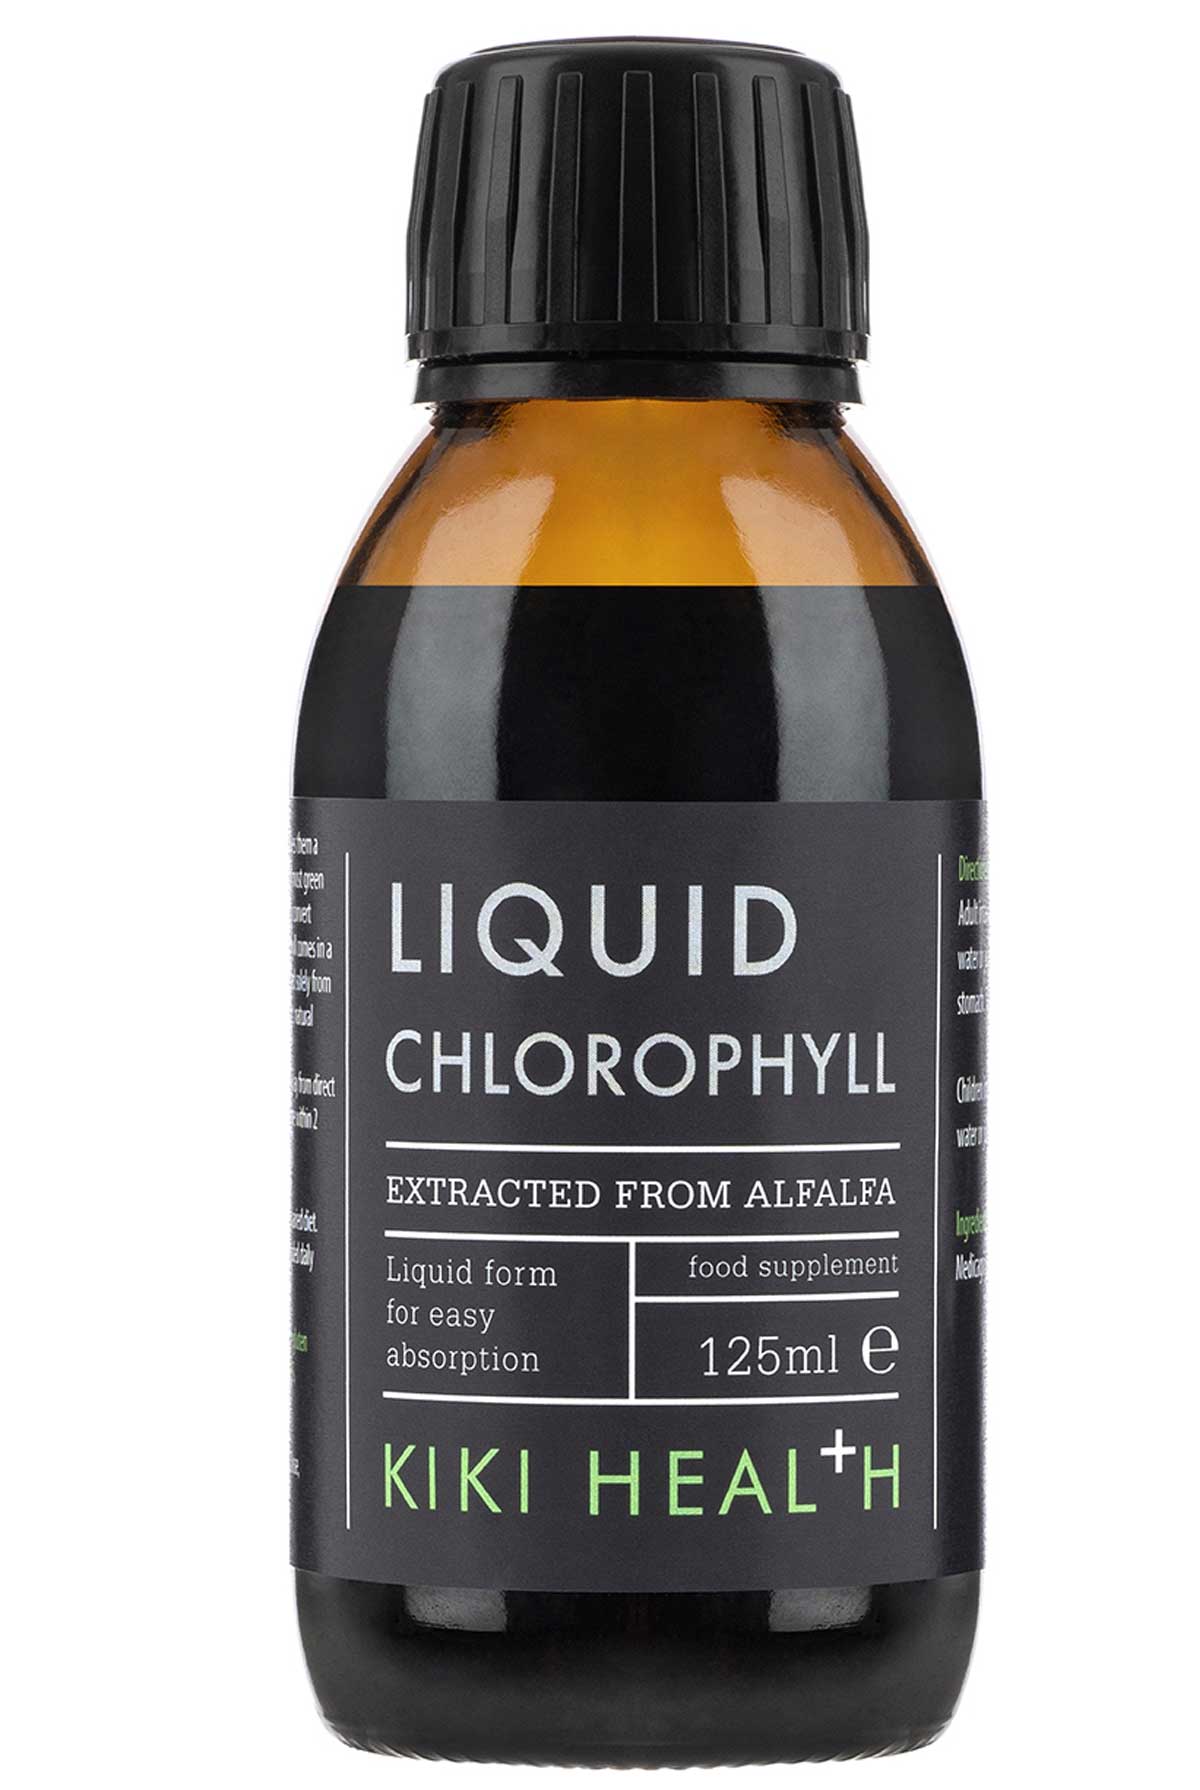 Kiki Health LIQUID CHLOROPHYLL 125ml - 125ml